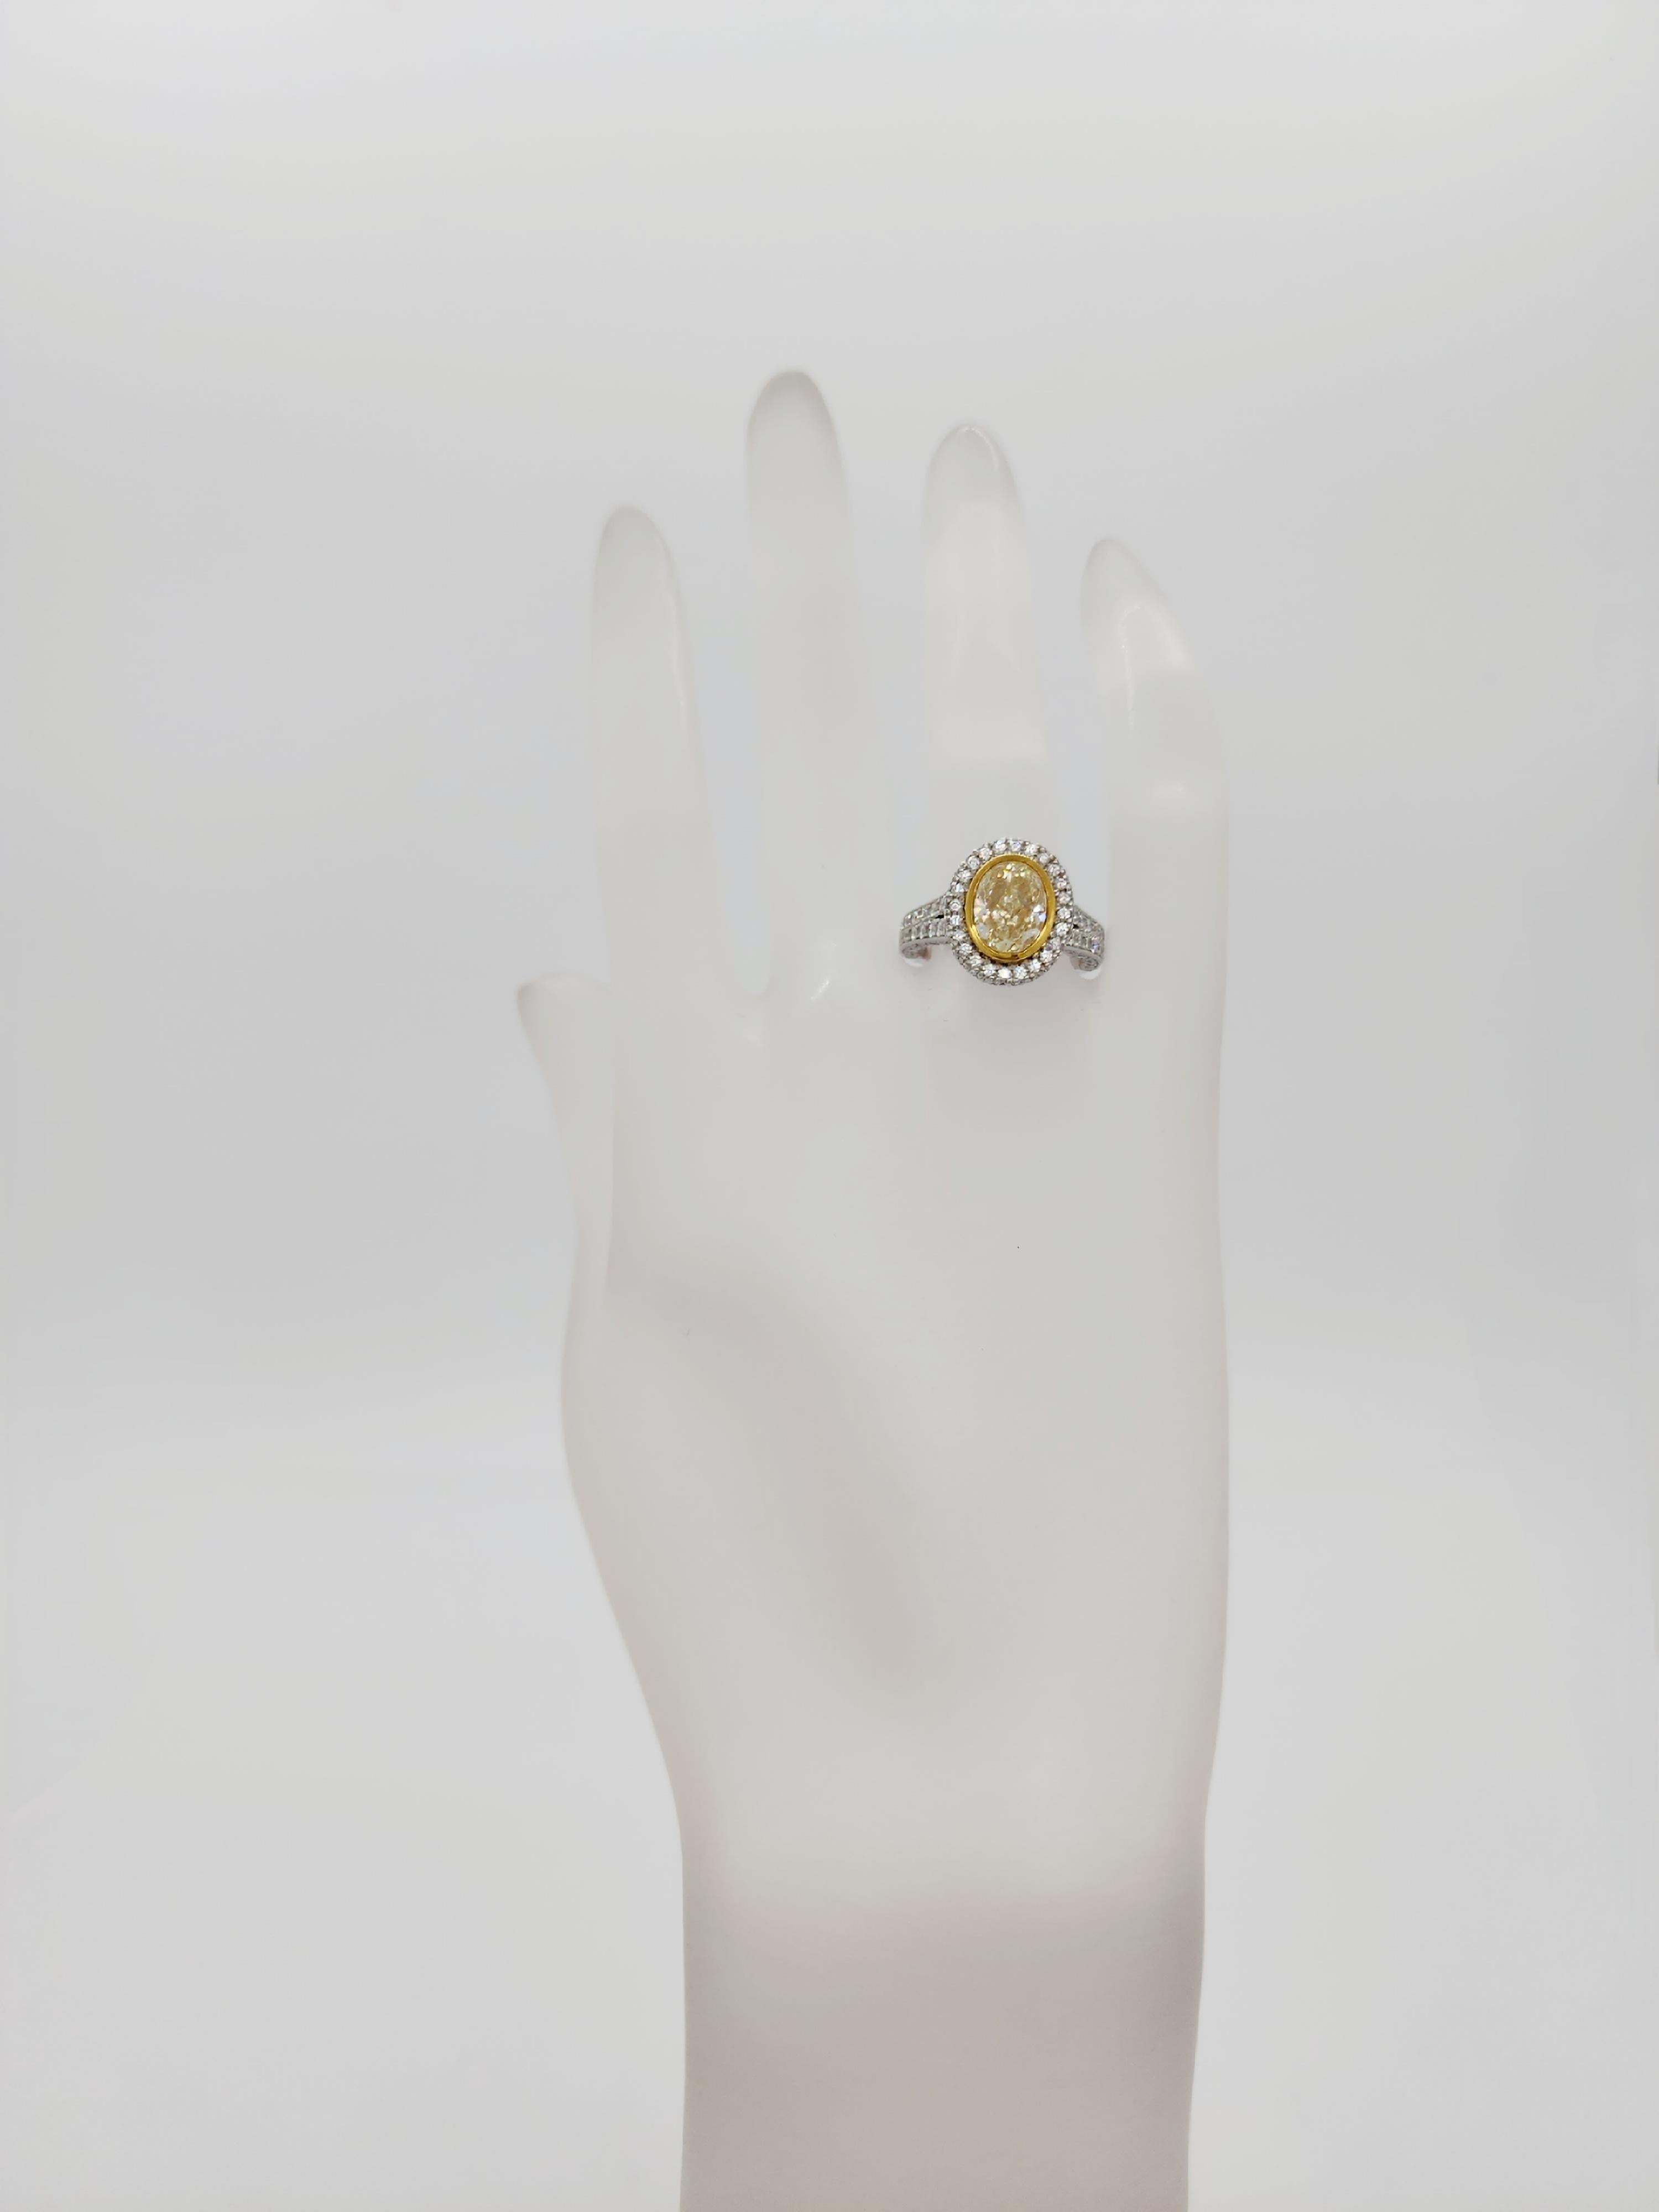 Oval Cut EGL Certified Fancy Yellow Diamond Oval Ring in 18k Two Tone Gold For Sale